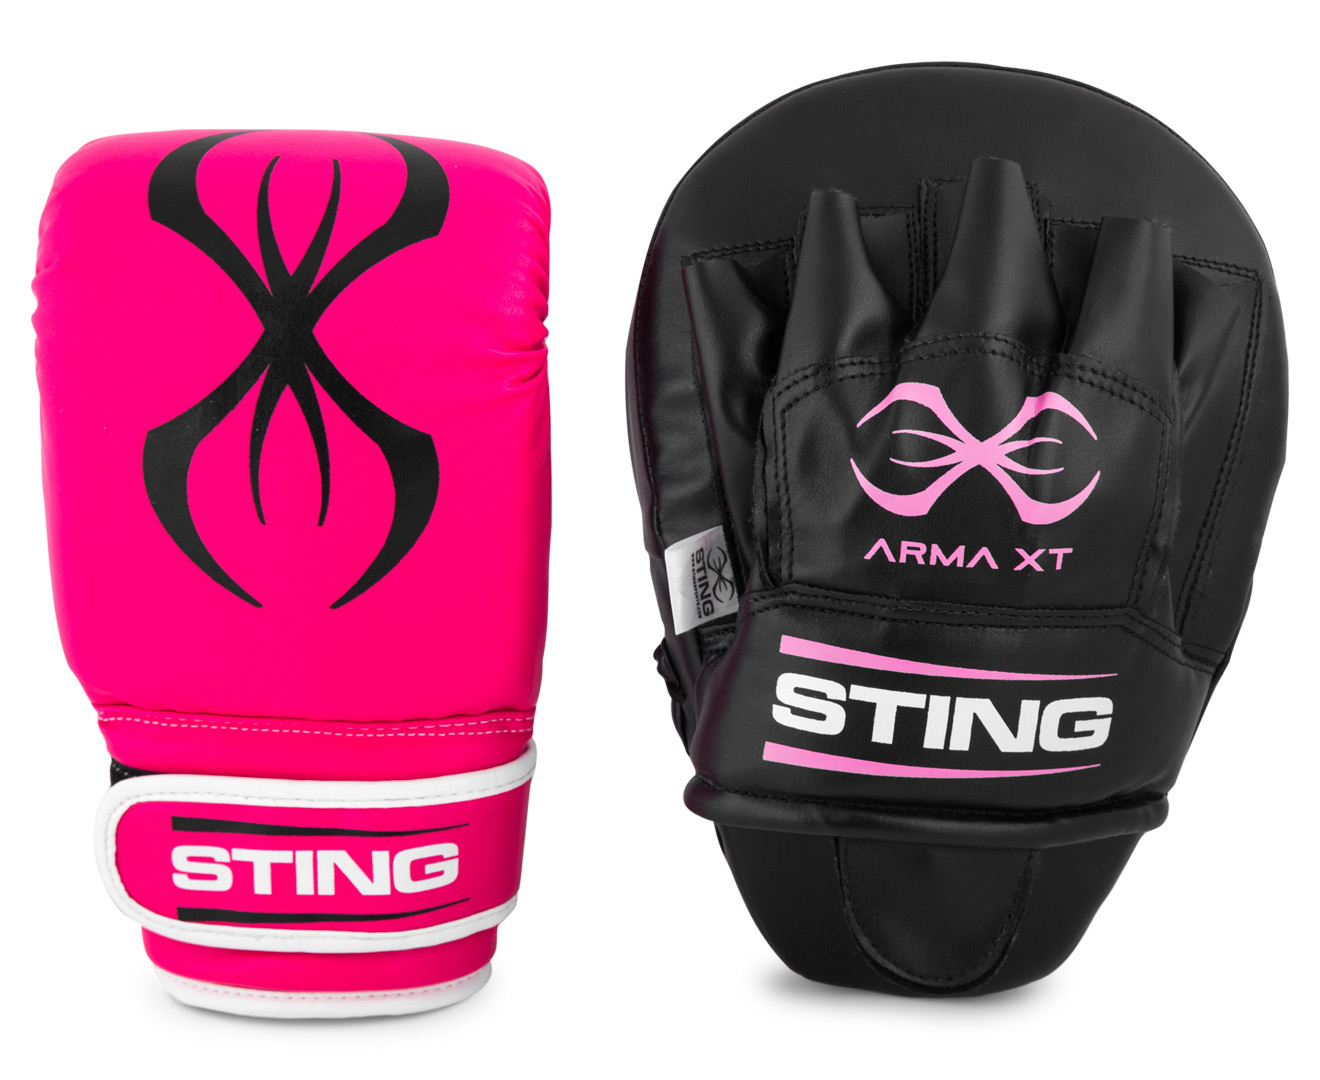 STING Arma XT Focus Combo Training Kit - Black/Pink